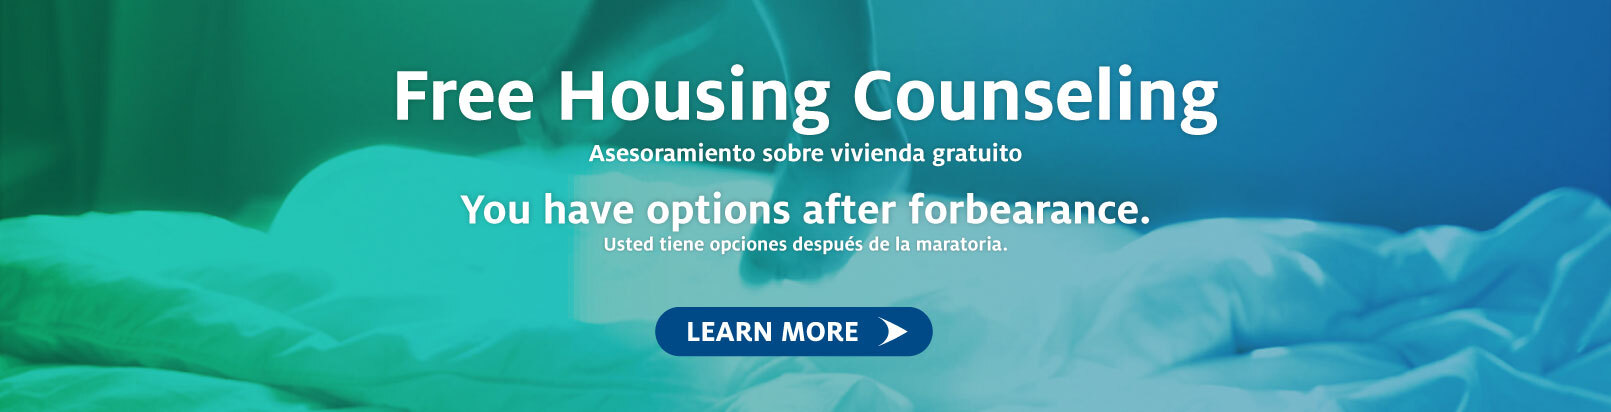 Free Housing Counseling